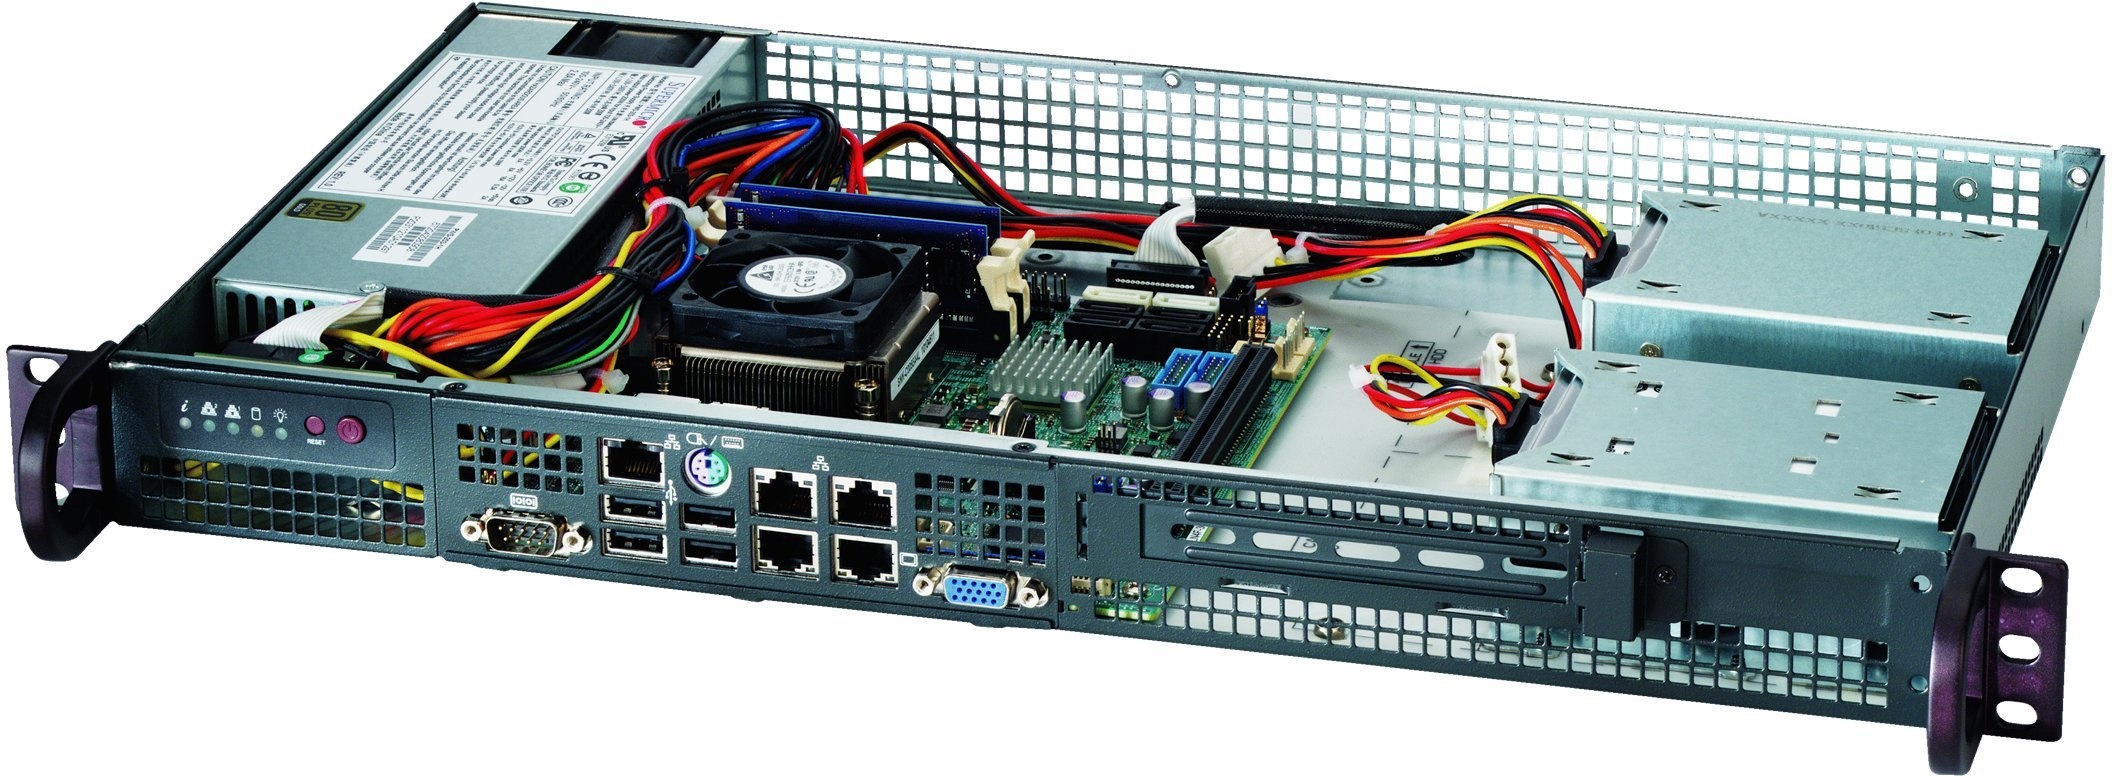 Supermicro SC505-203B: Servergehäuse 19", Server Barebone